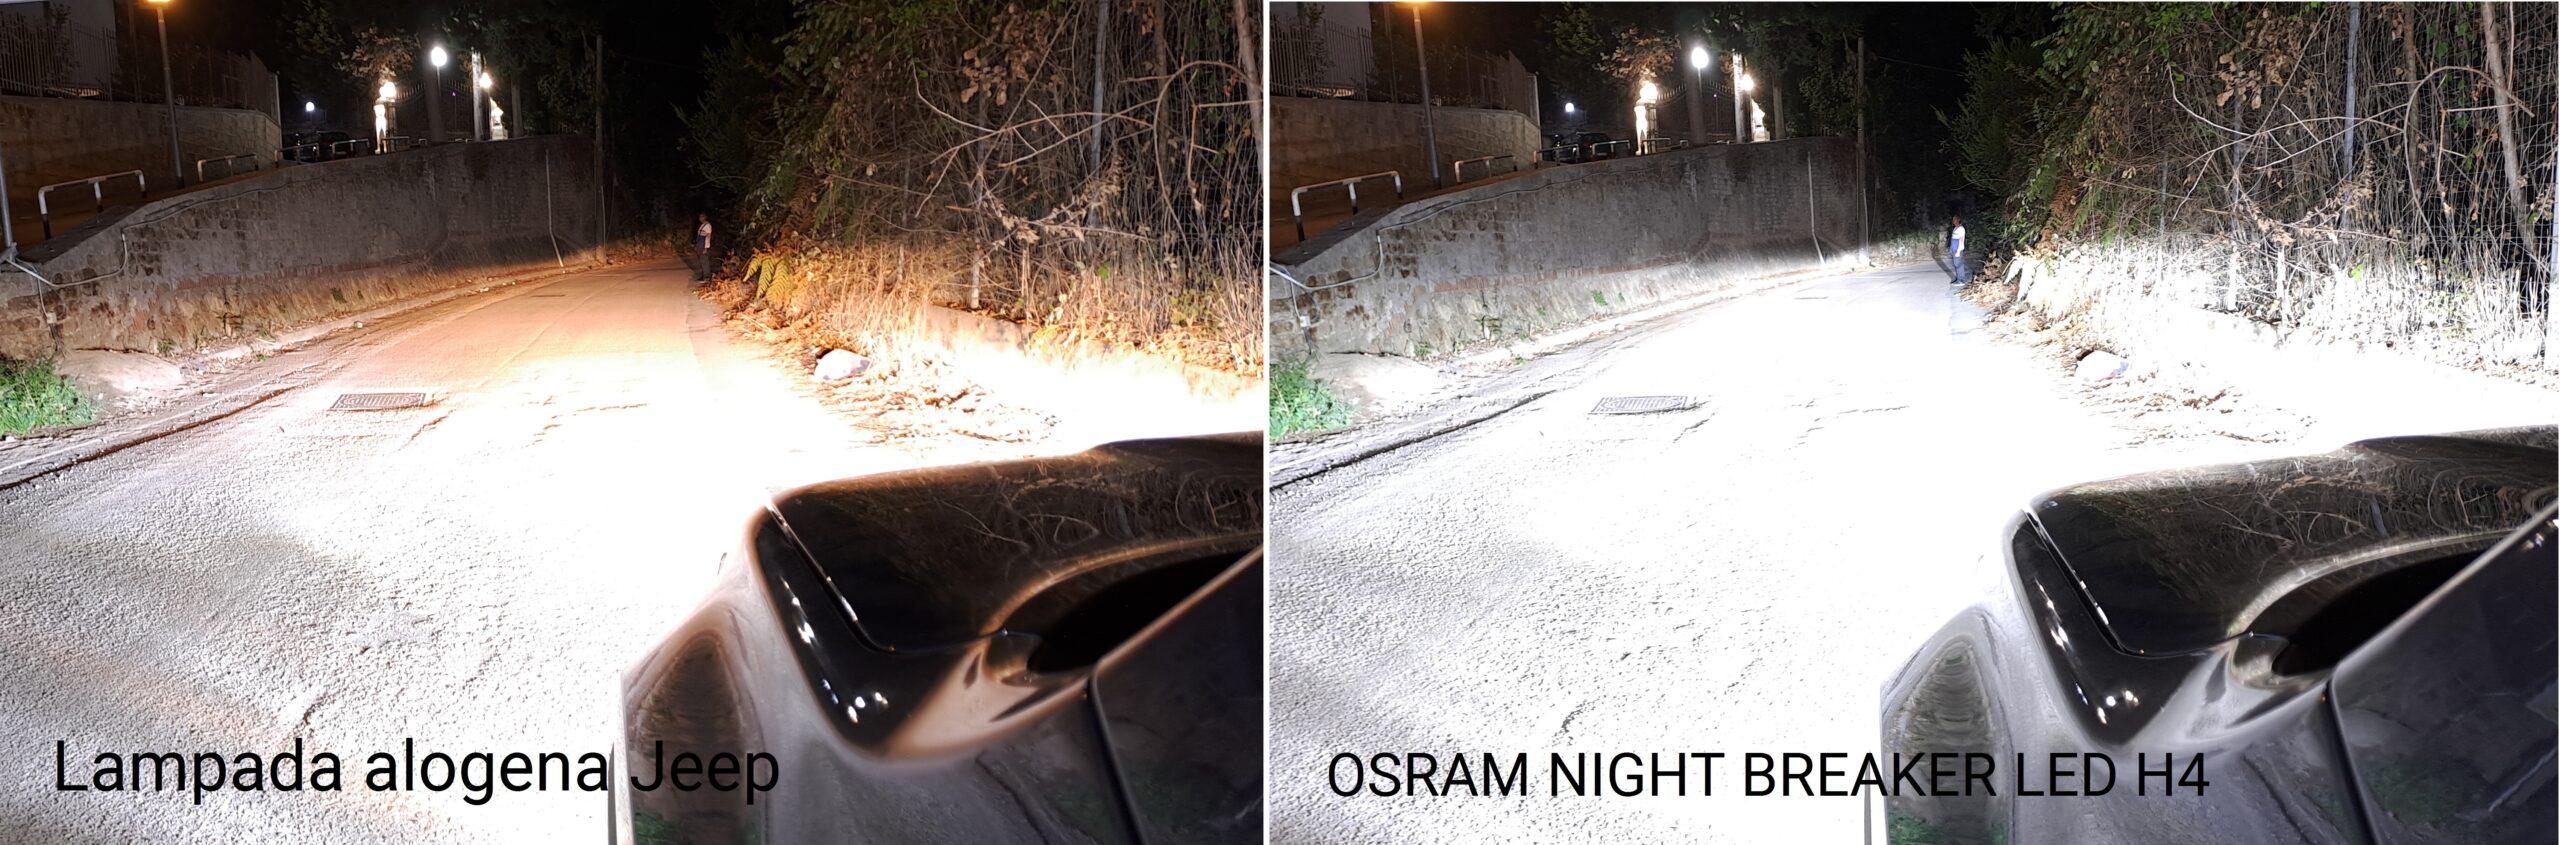 Test lampade OSRAM NIGHT BREAKER LED: le retrofit omologate e legali